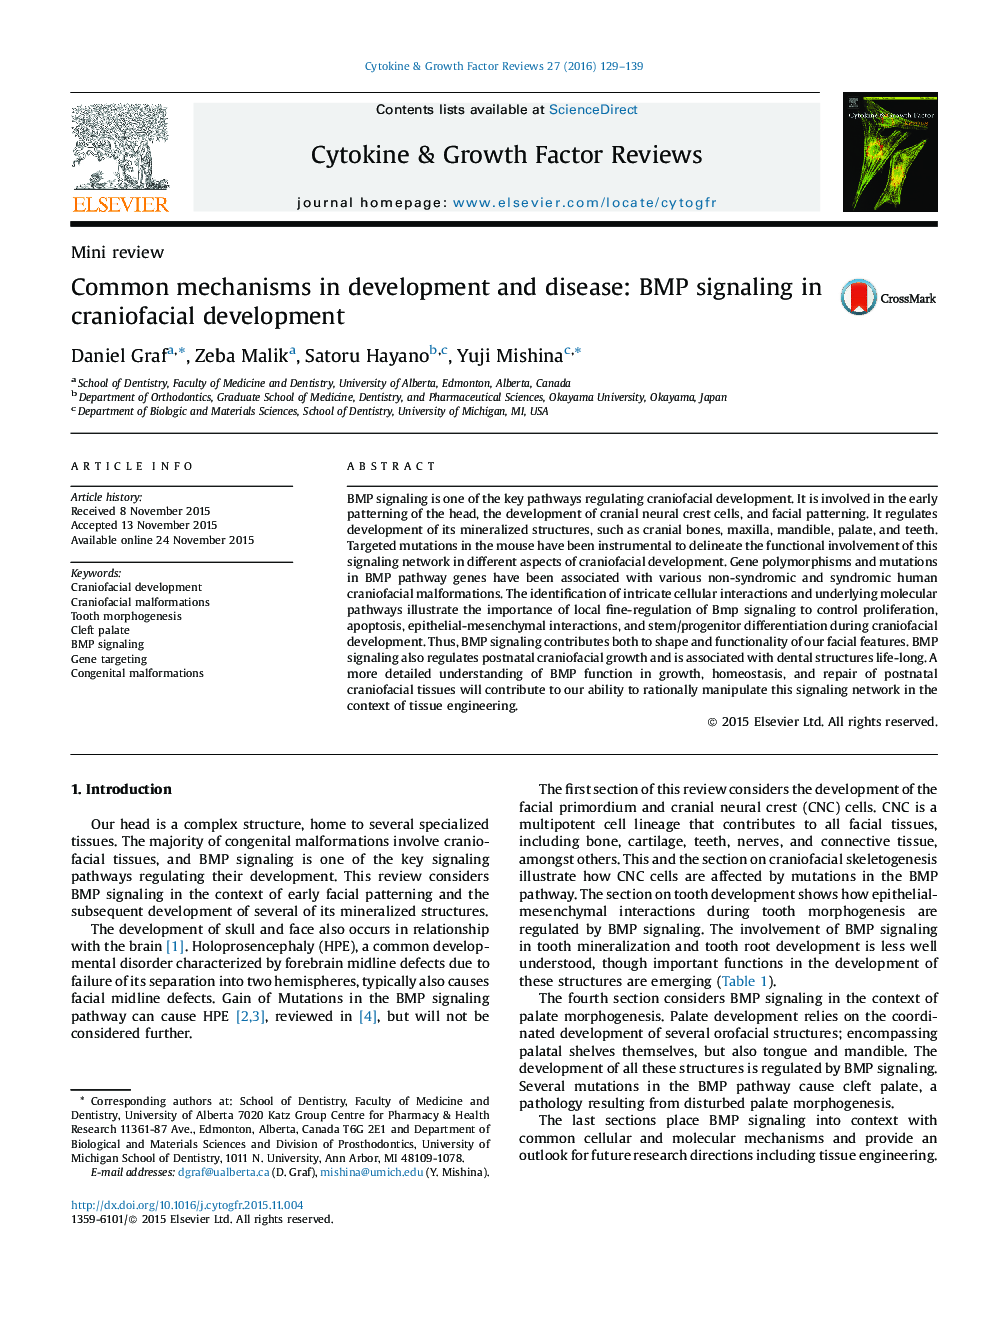 Common mechanisms in development and disease: BMP signaling in craniofacial development